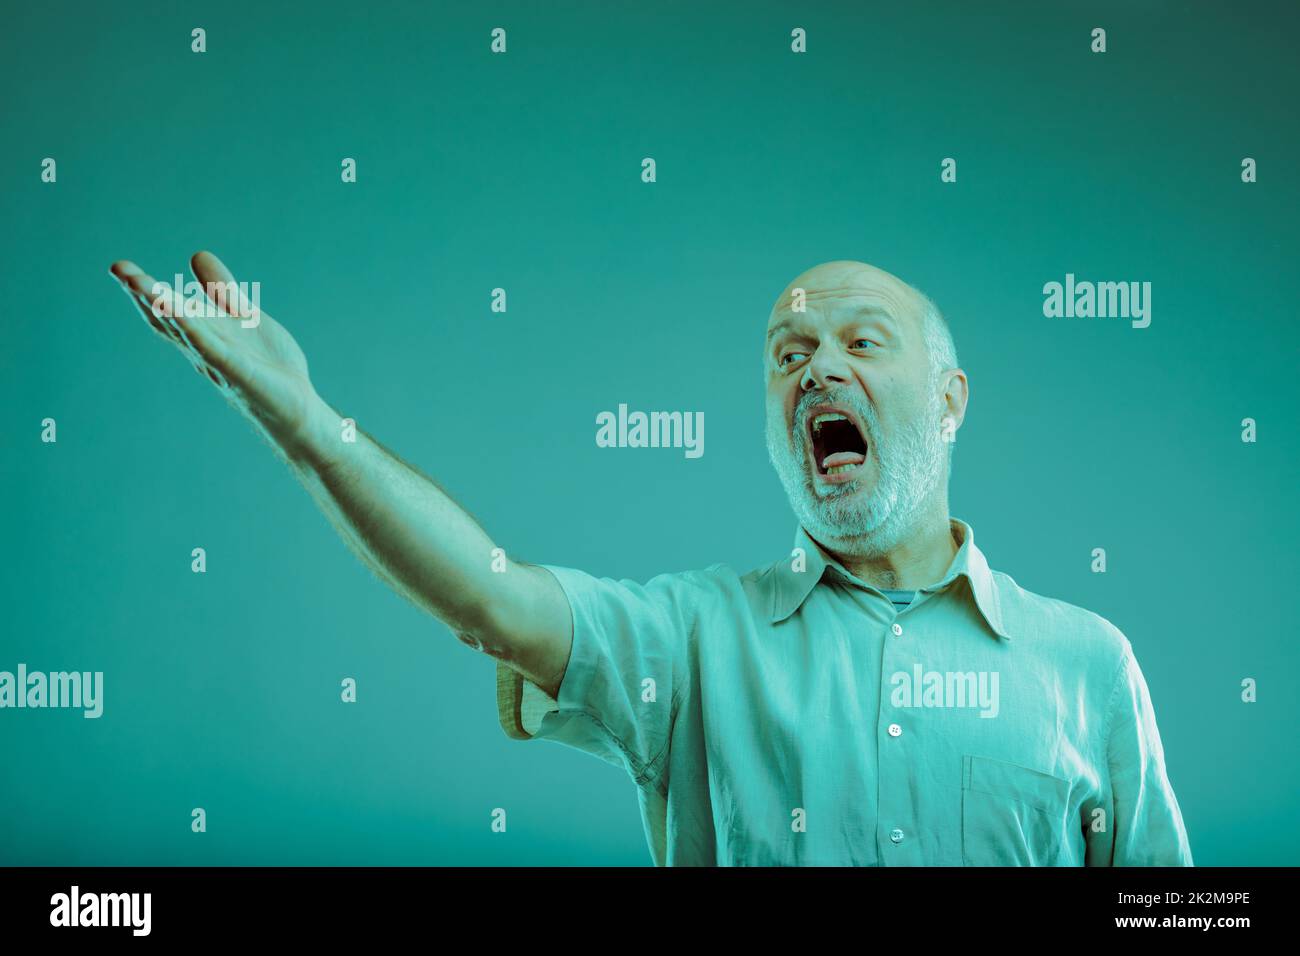 Senior man singing or screaming at someone gesturing with hand Stock Photo